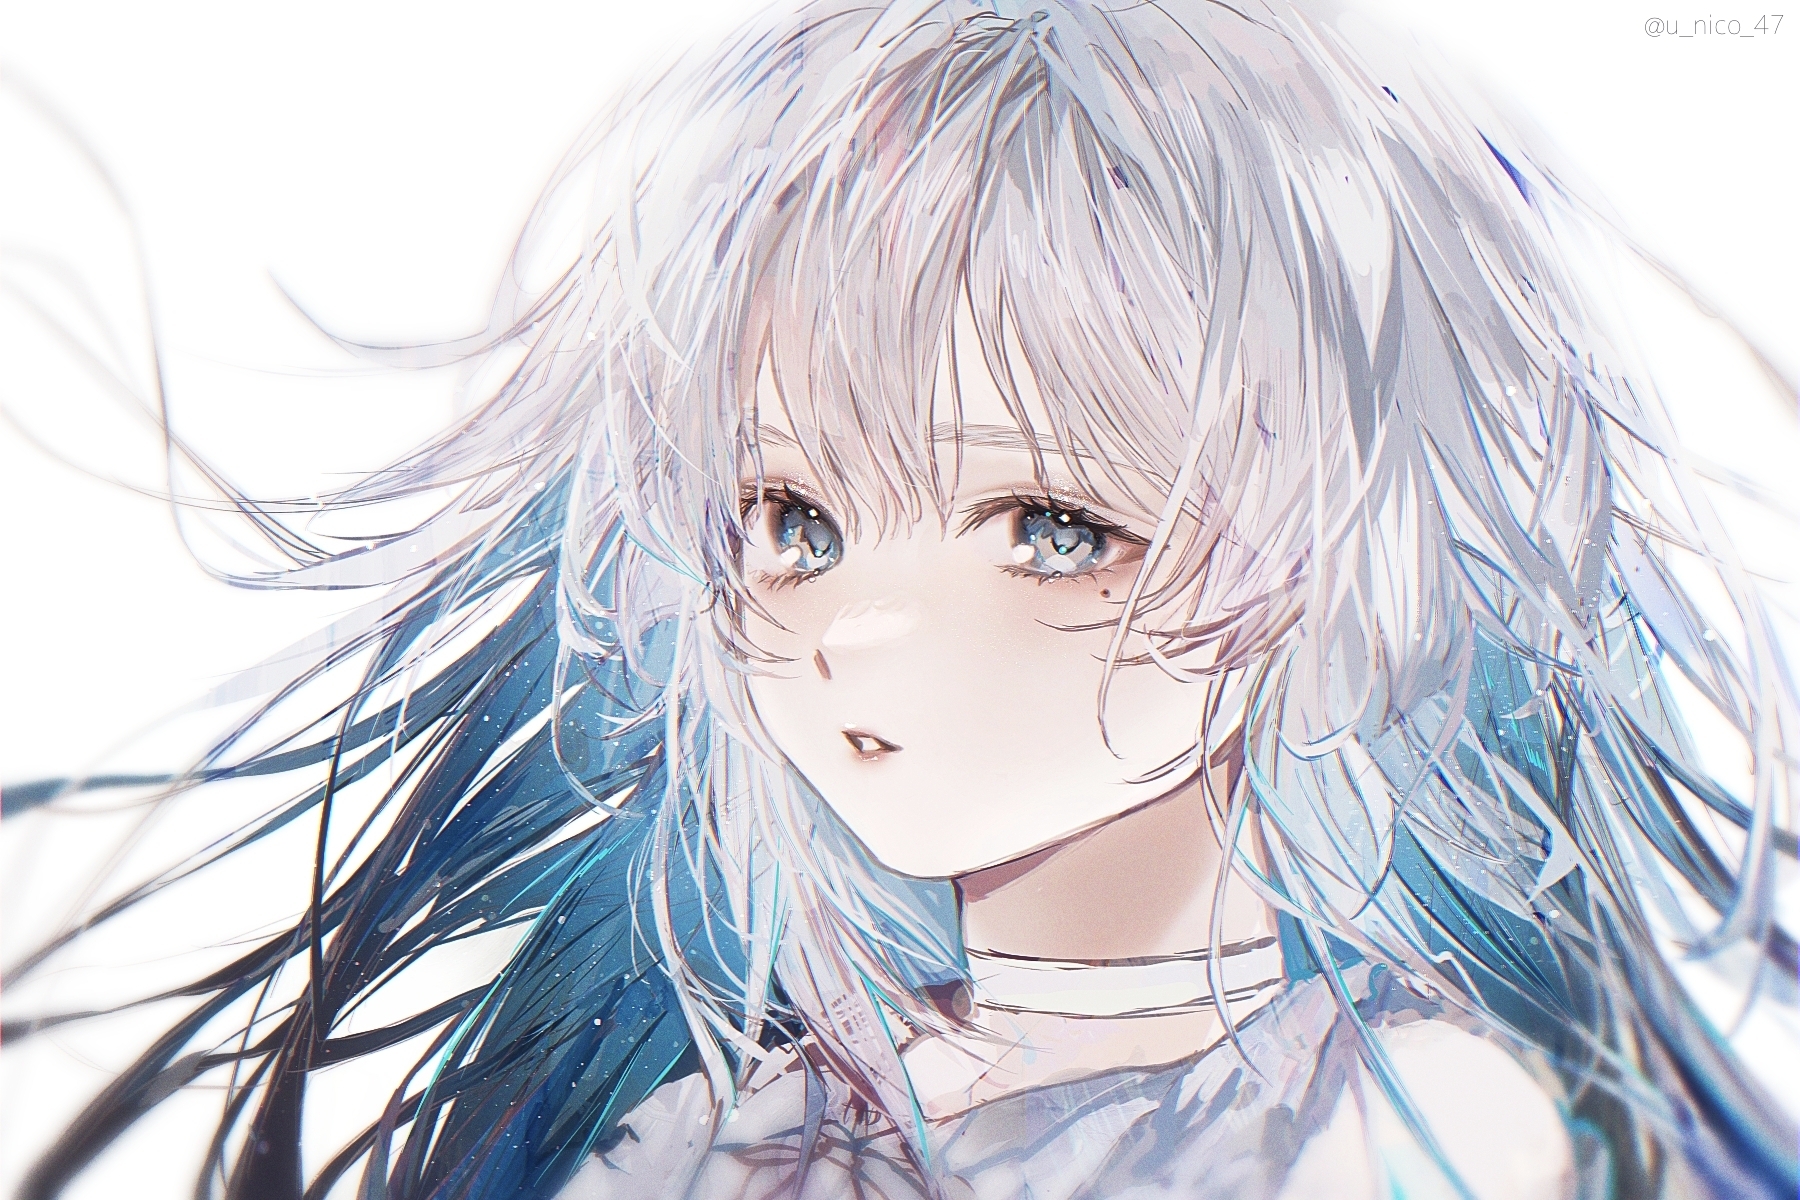 Anime Anime Girls Long Hair Looking At Viewer White Background Blue Eyes Silver Hair Artwork U Nico 1800x1200